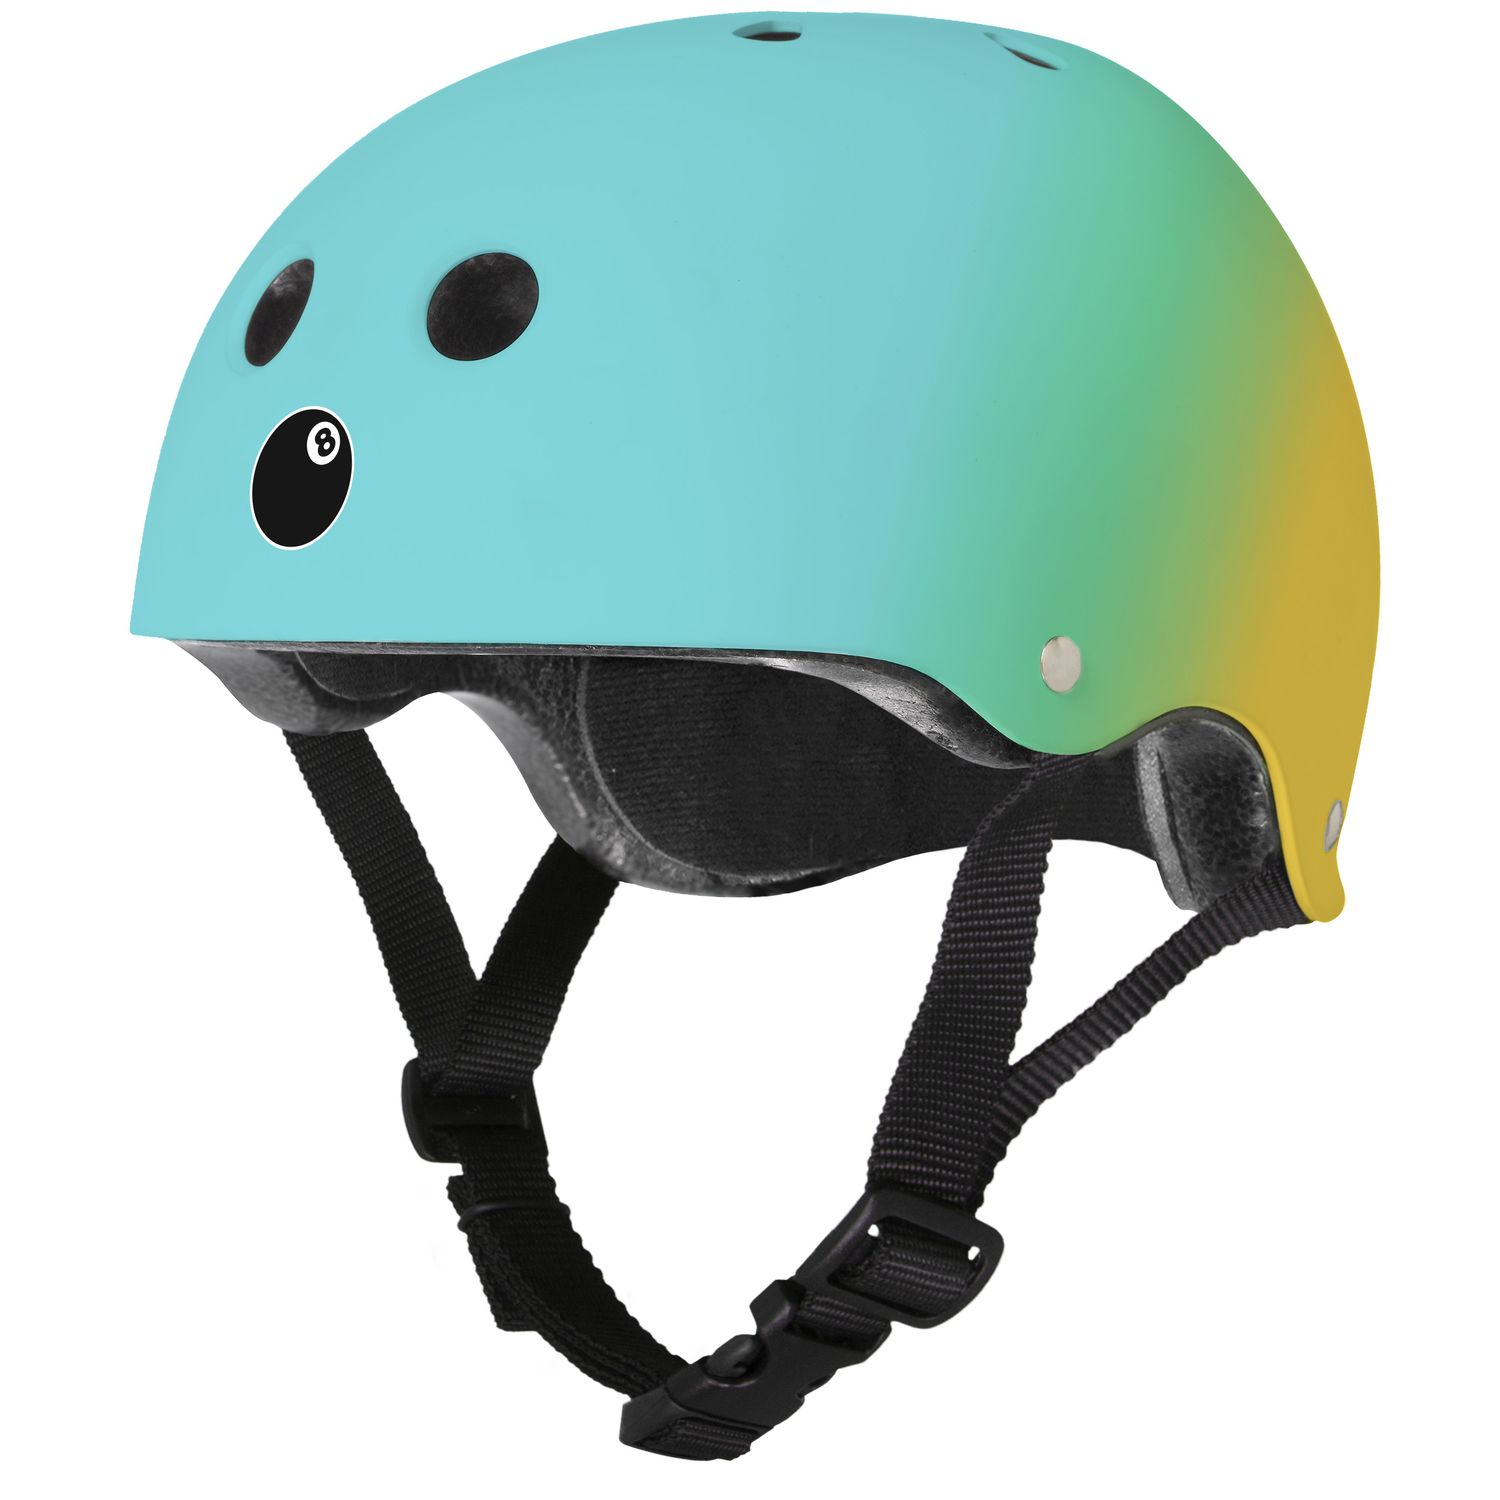 Шлем защитный Eight Ball Coral Reef (8+) - голубой, зелёный, жёлтый шлем защитный универсальный sportex jr f11721 1 голубой